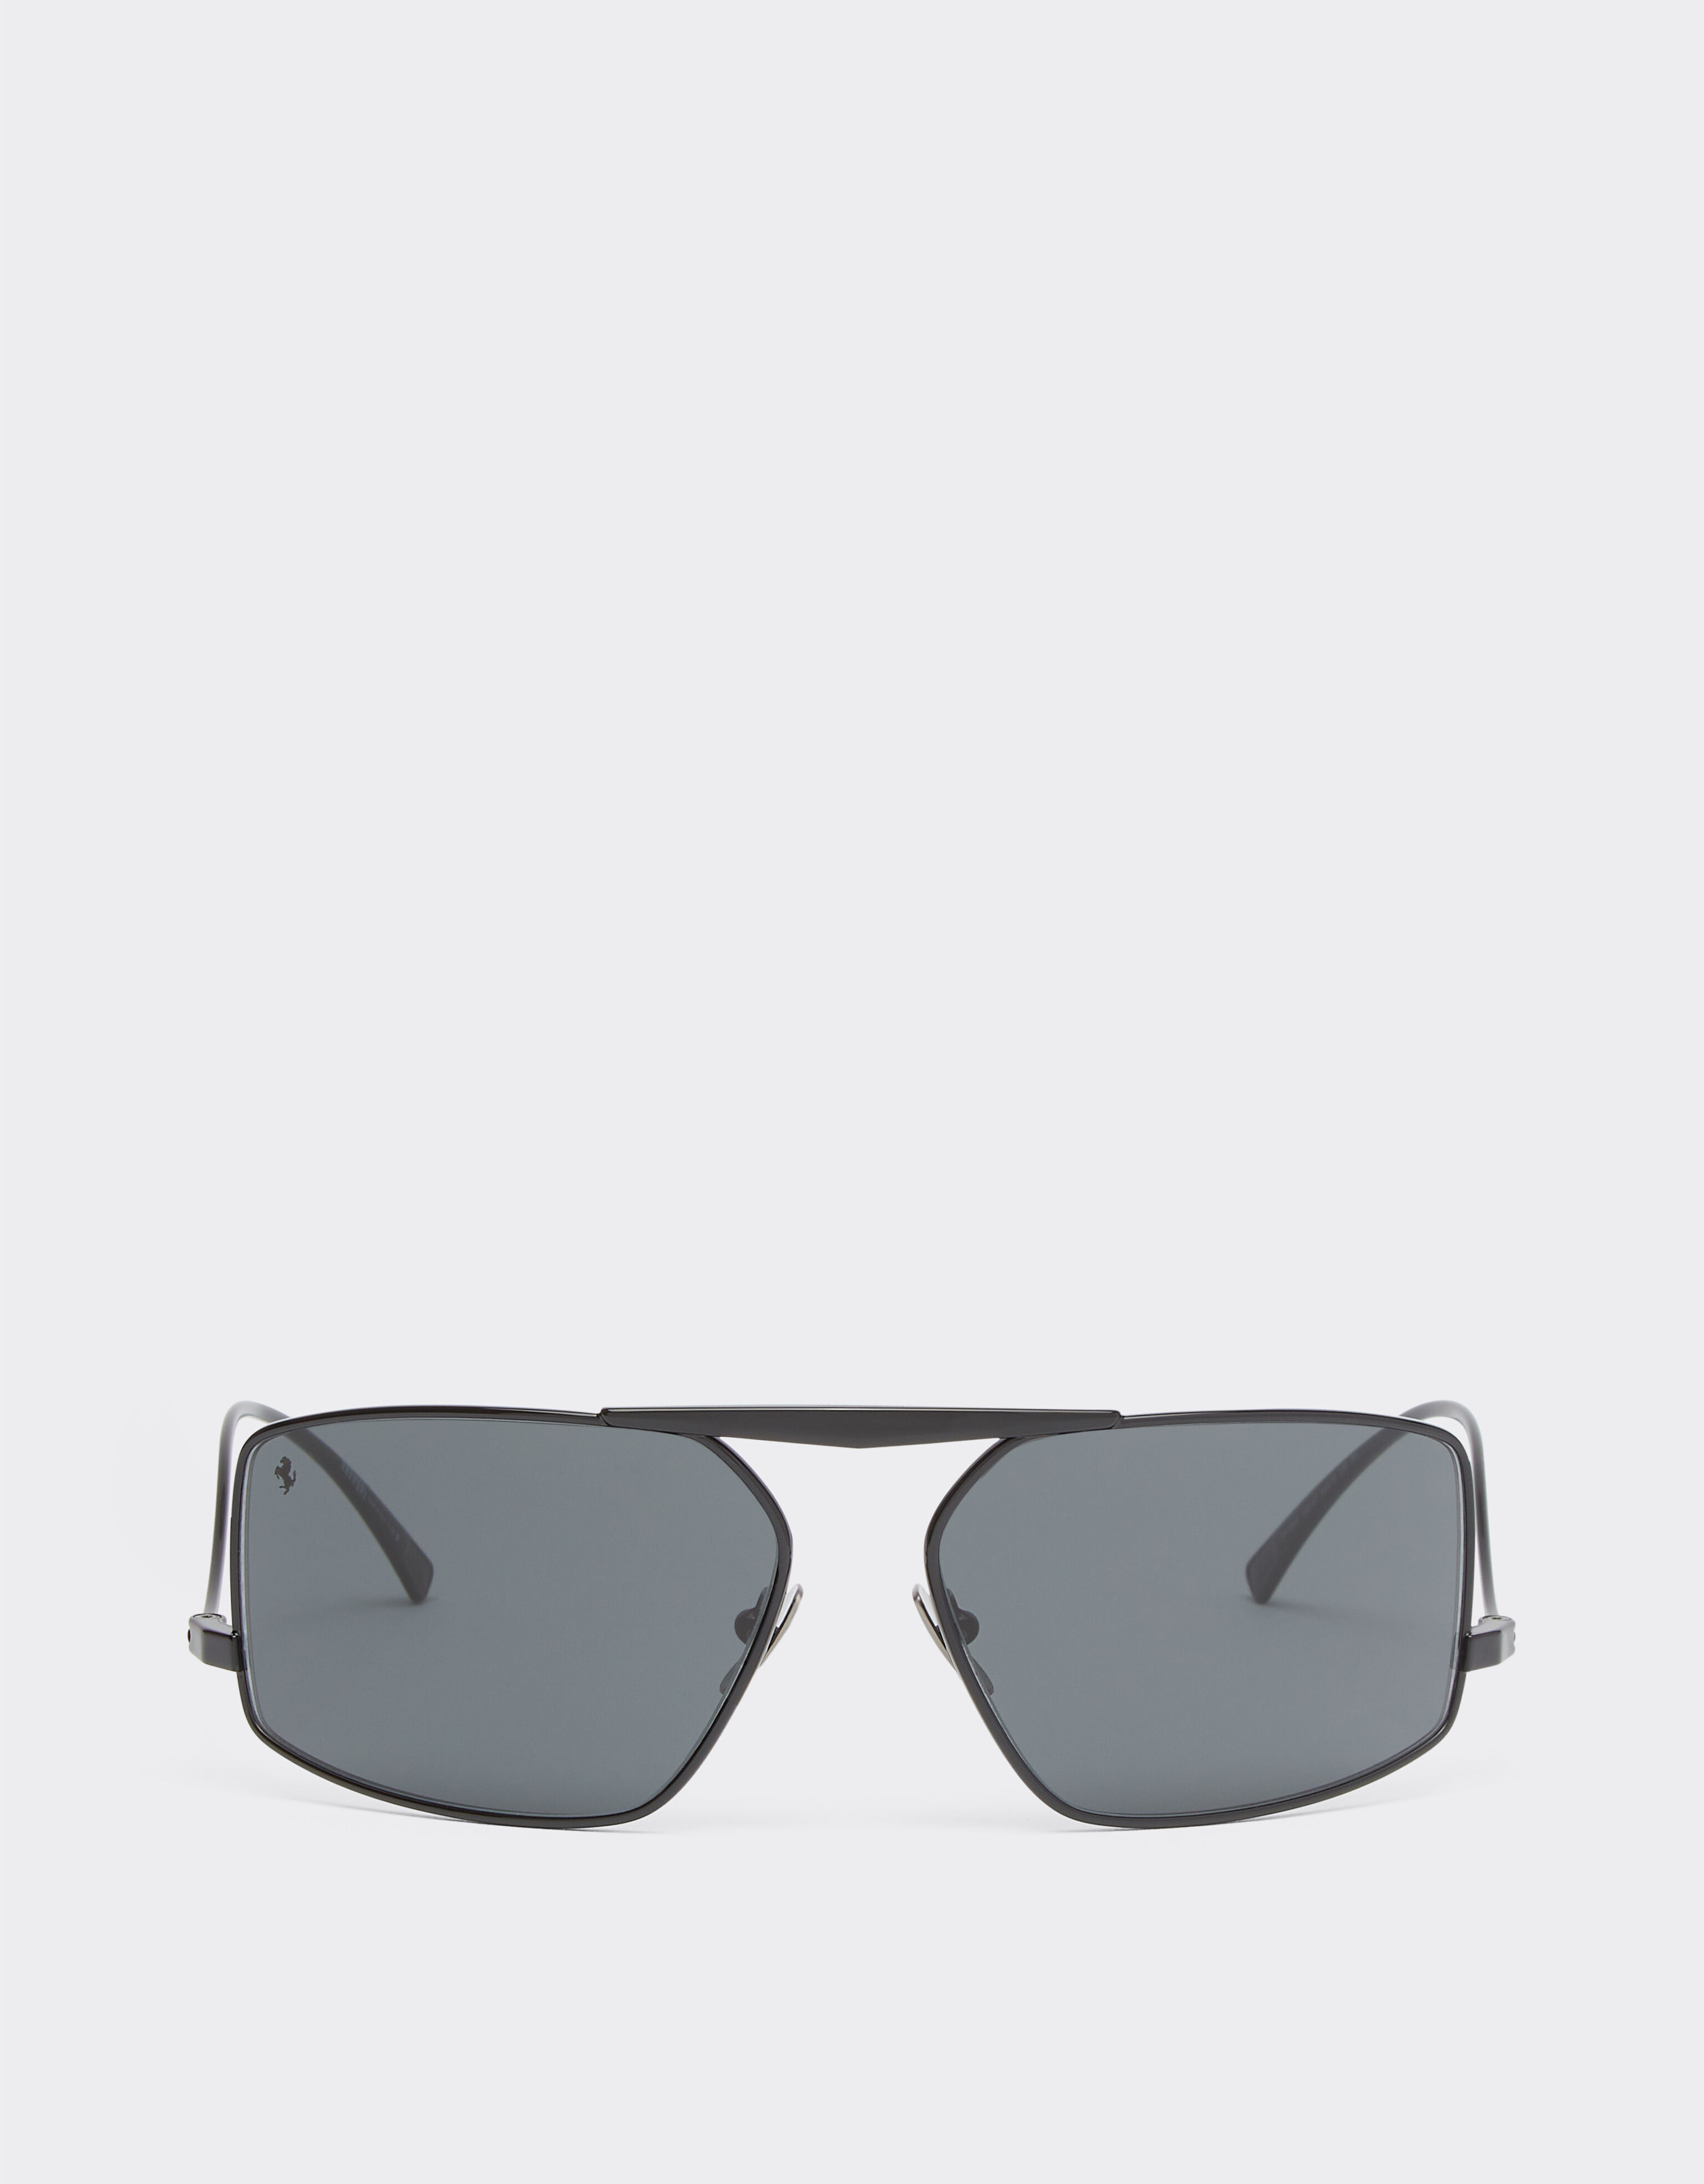 Ferrari Ferrari sunglasses in black metal with grey lenses Black F1201f